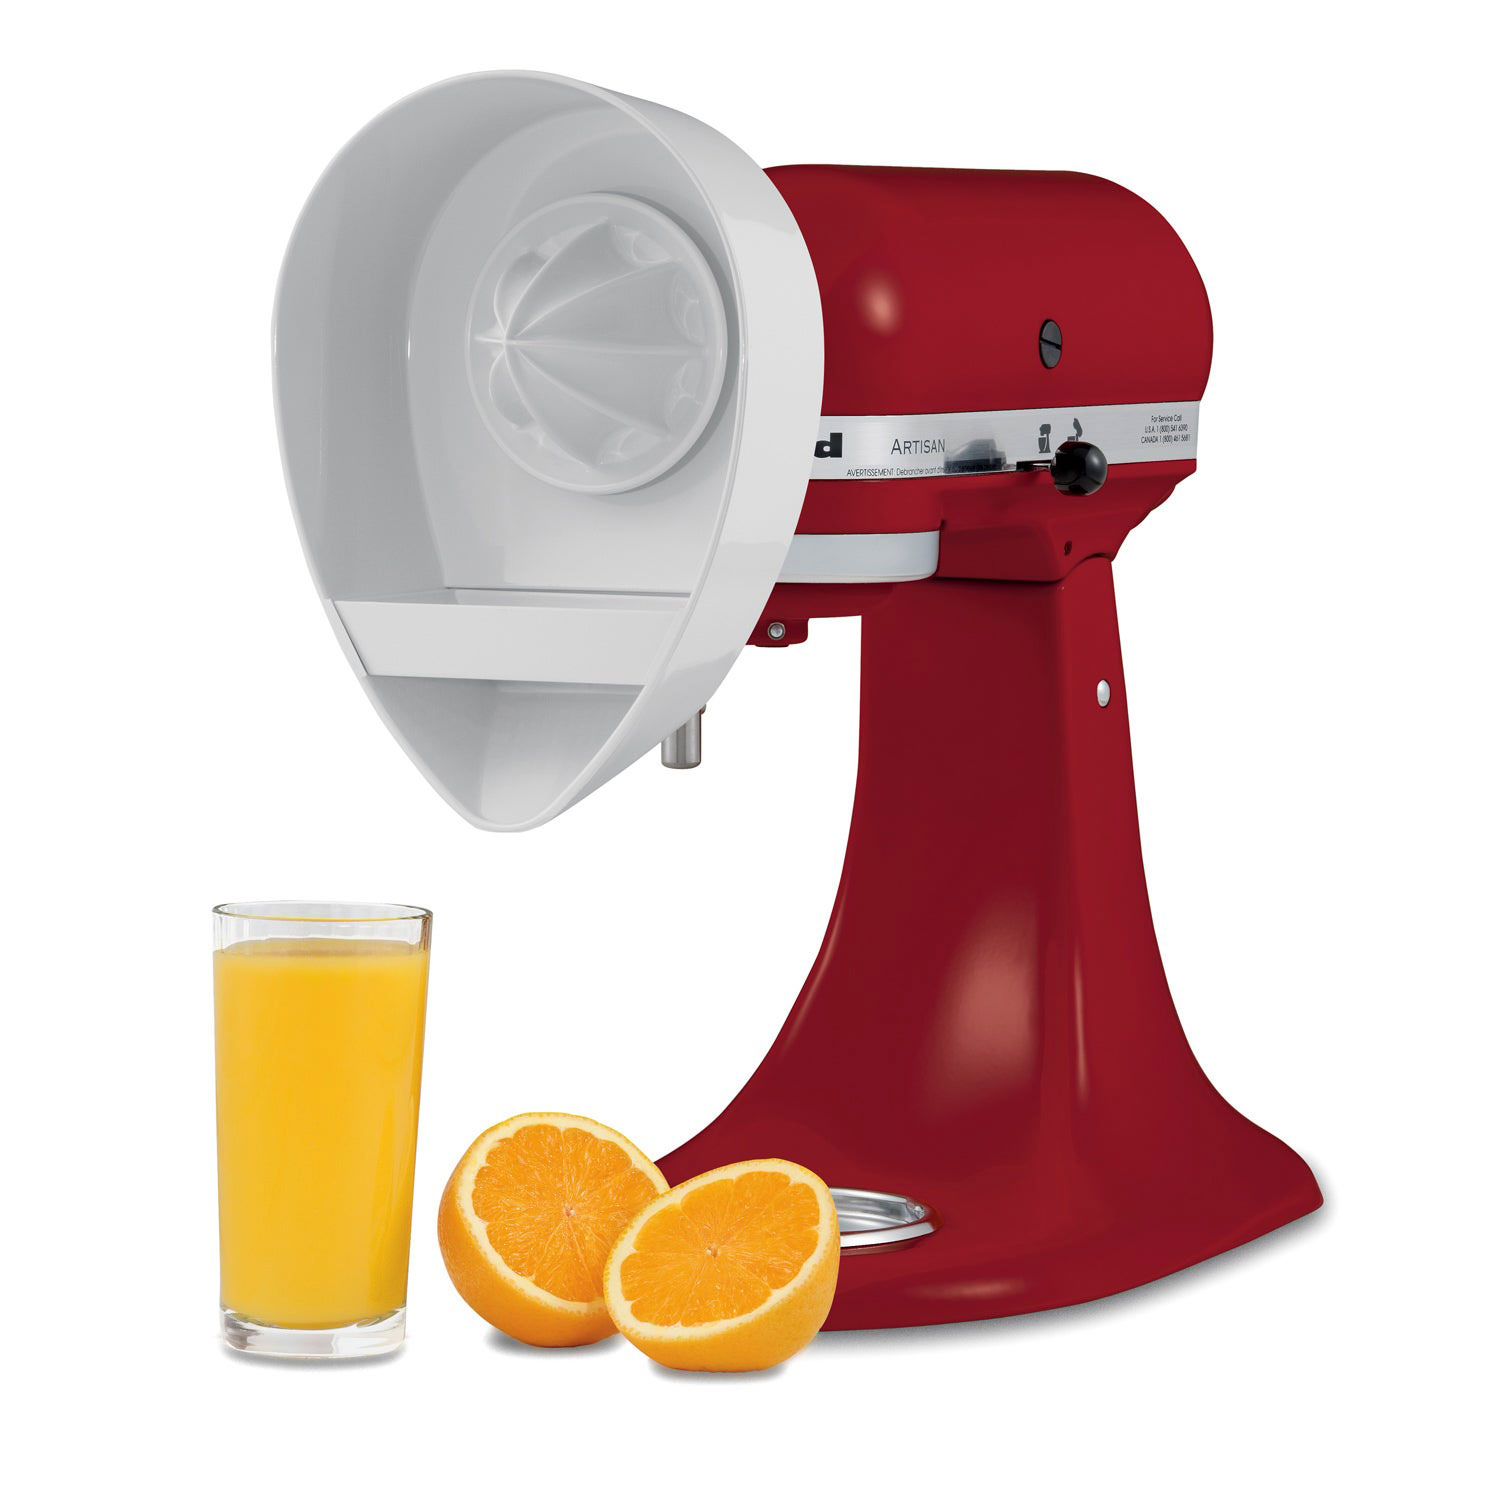  Juicer Attachment for Kitchenaid Stand Mixer with 2 Size Reamer, Juicer for Kitchenaid Stand Mixer Citrus Juicer Attachment Accessories by  InnoMoon: Home & Kitchen